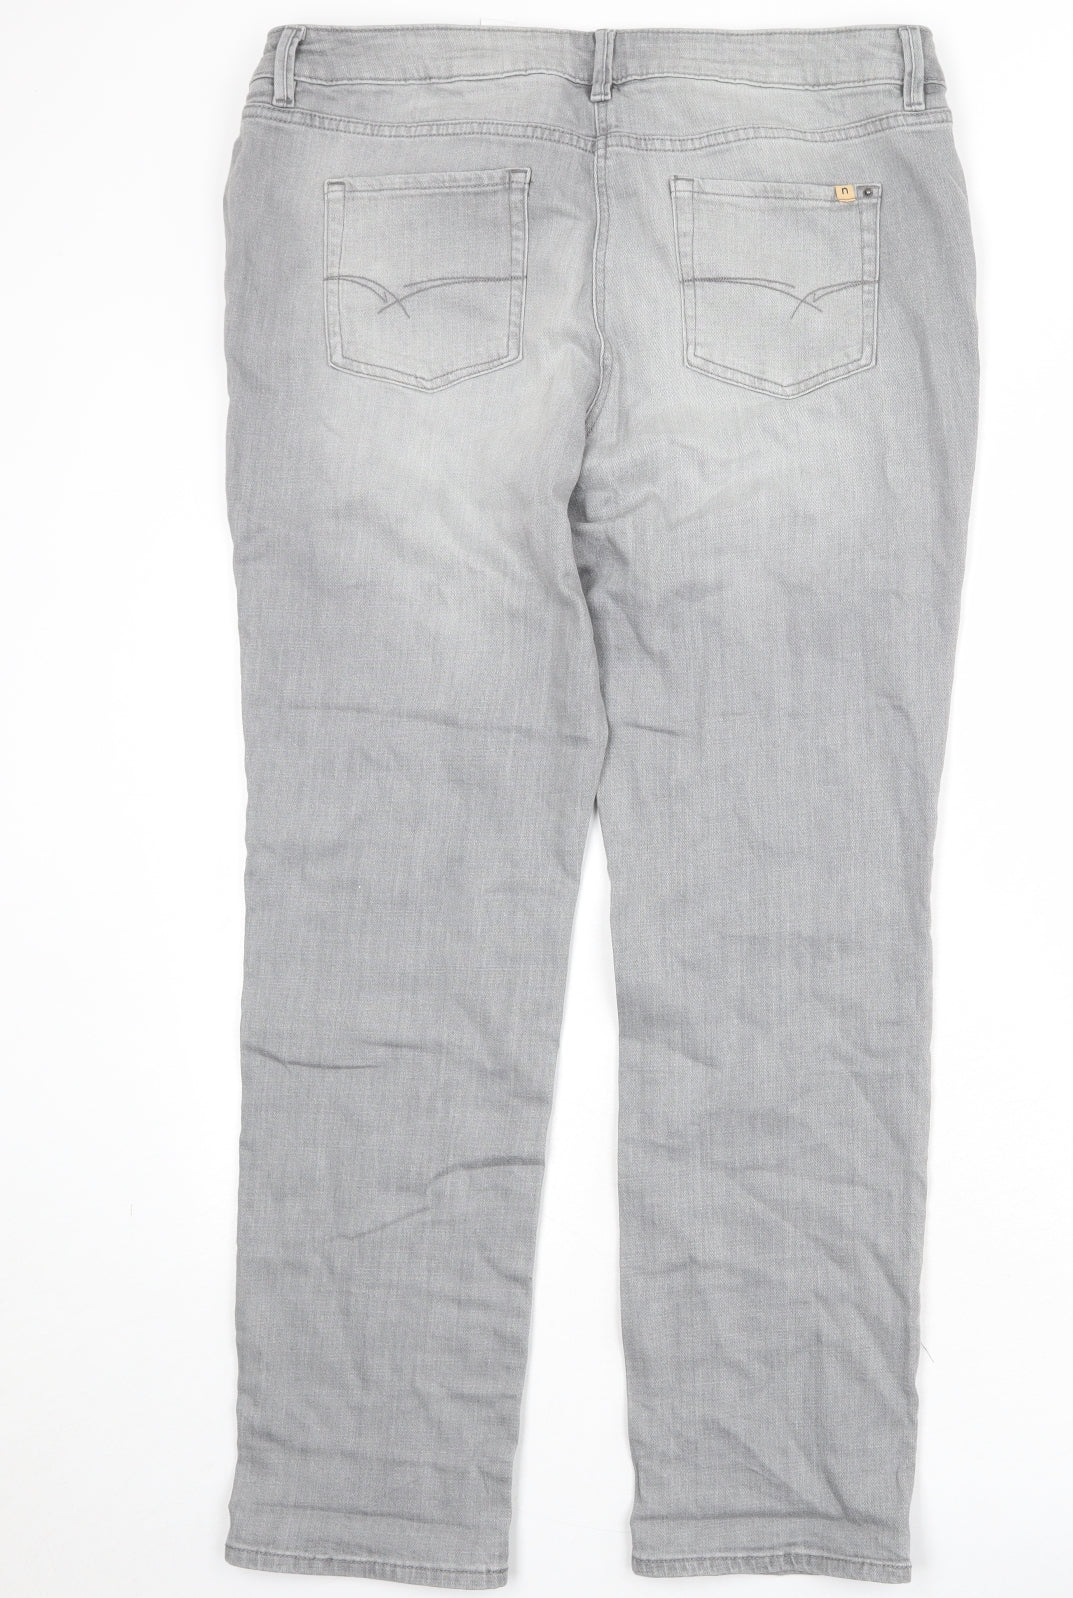 NEXT Womens Grey Cotton Straight Jeans Size 16 Regular Zip